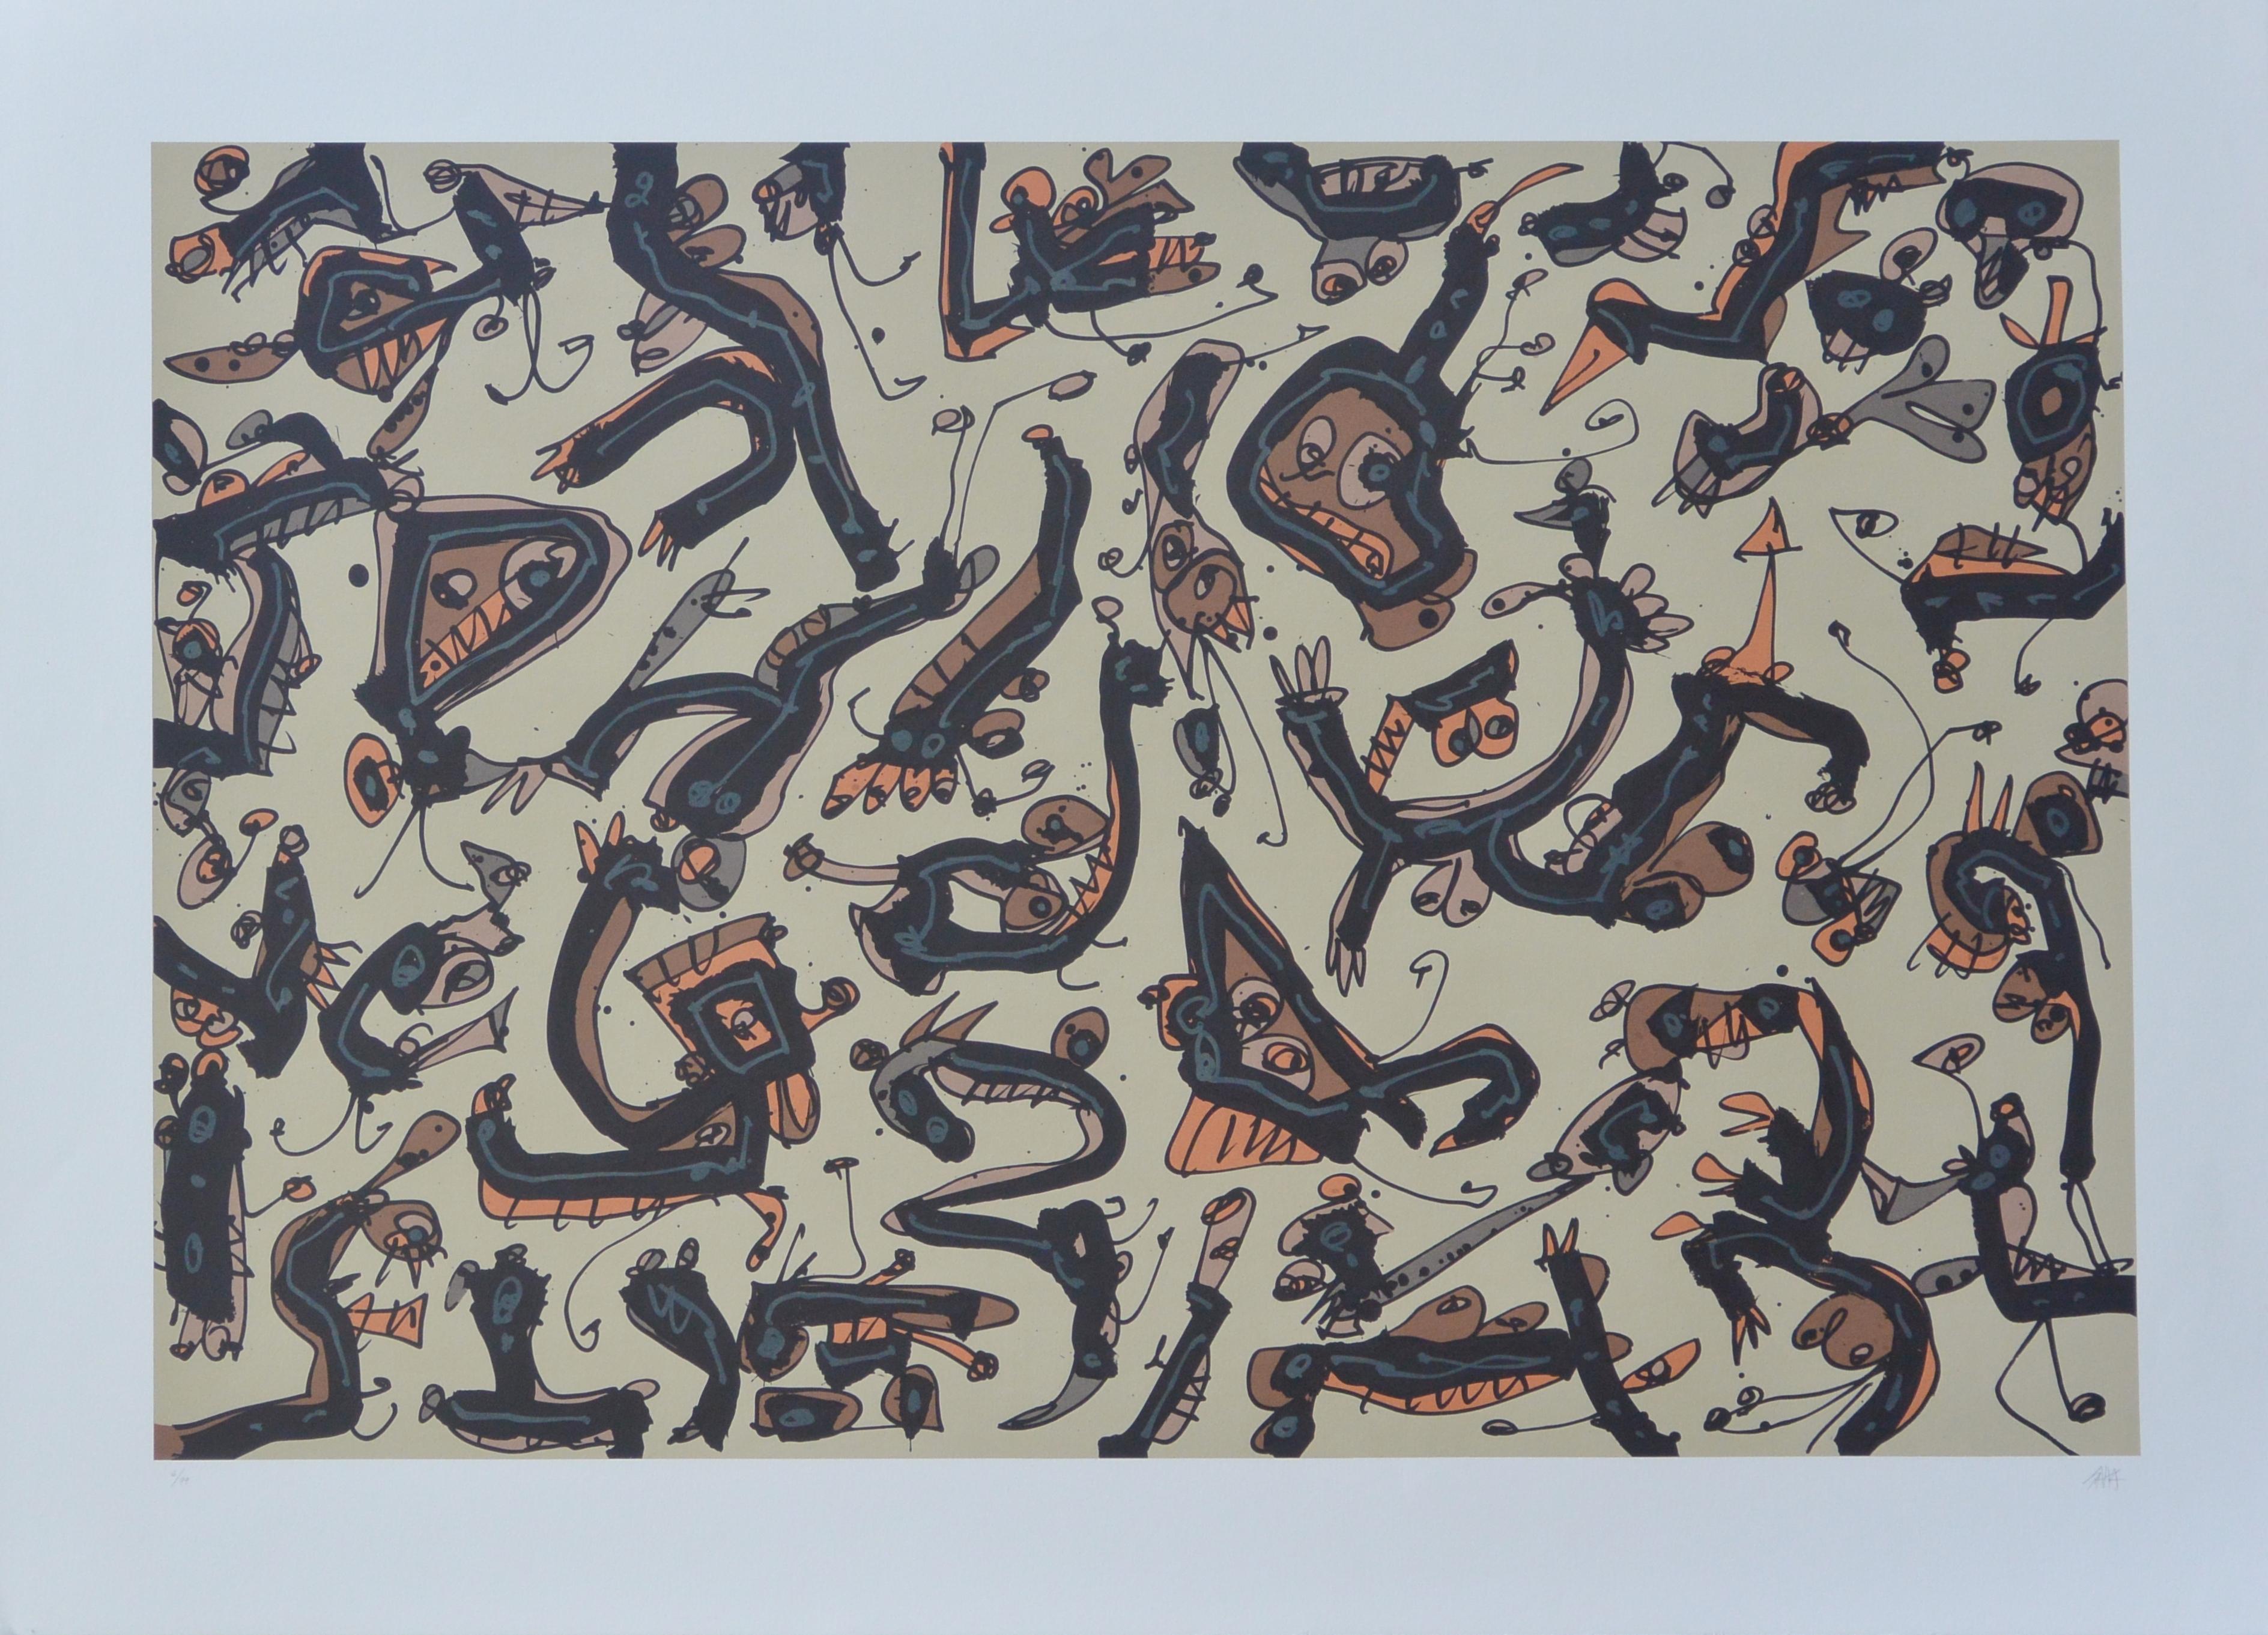 Antonio Saura Abstract Print - "SERIE ABIERTA 1" original litograph abstract painting